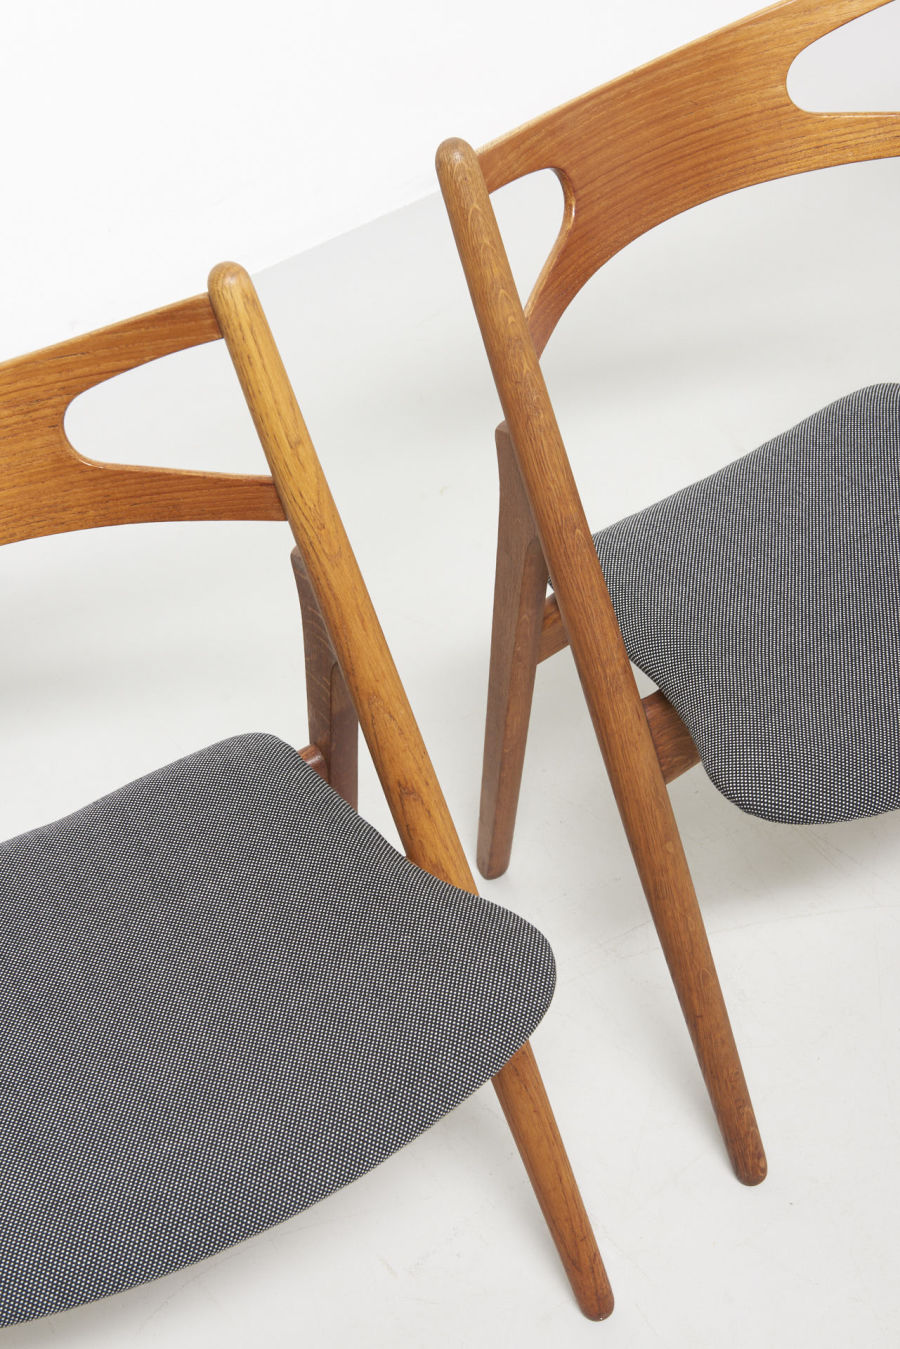 modestfurniture-vintage-2131-hans-wegner-sawbuck-chairs-ch-2906